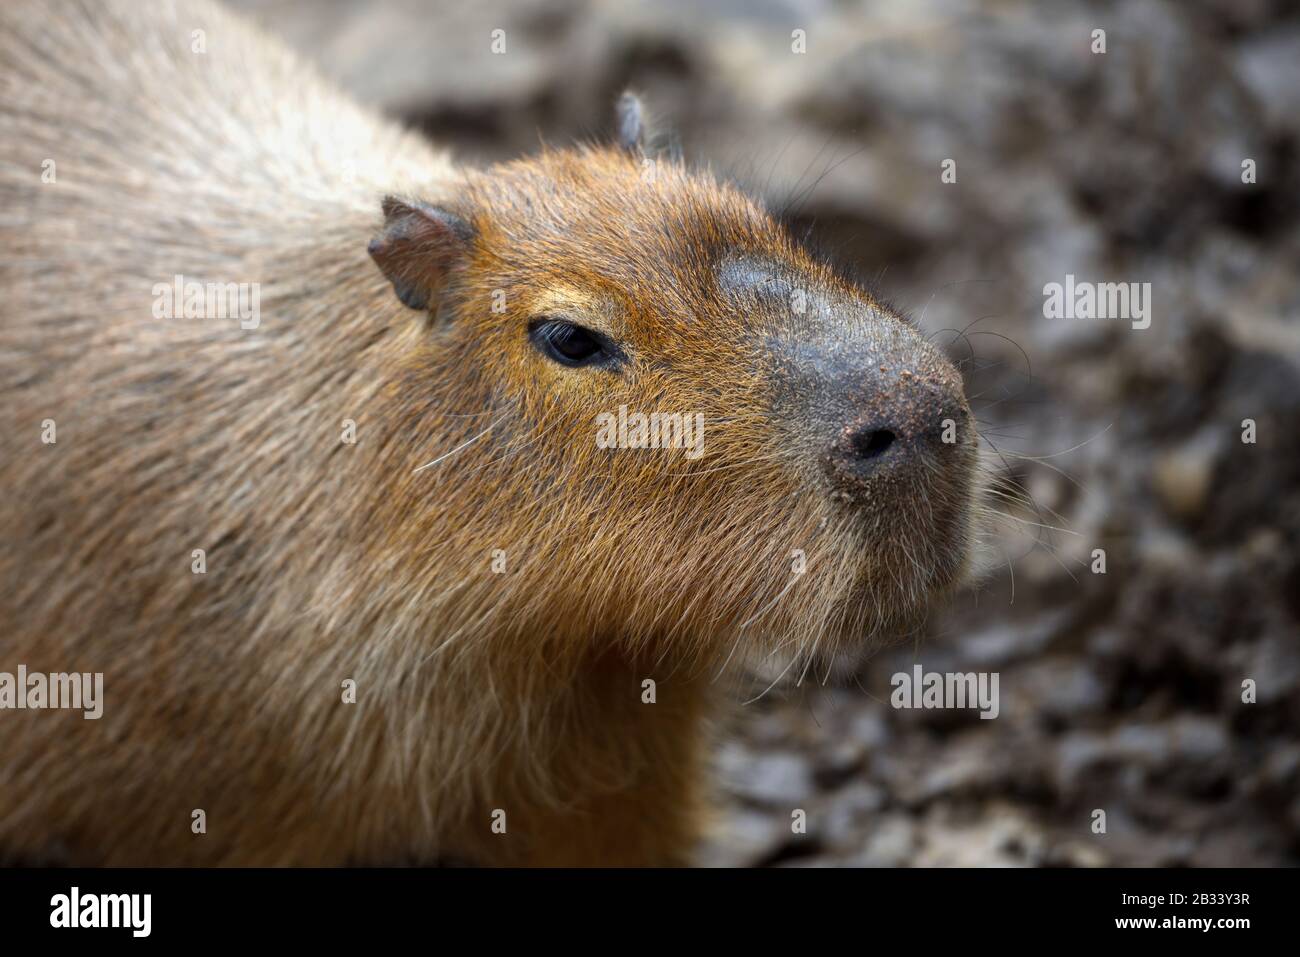 Capybara (Hydrochoerus hydrochaeris). Gros plan portrait Banque D'Images